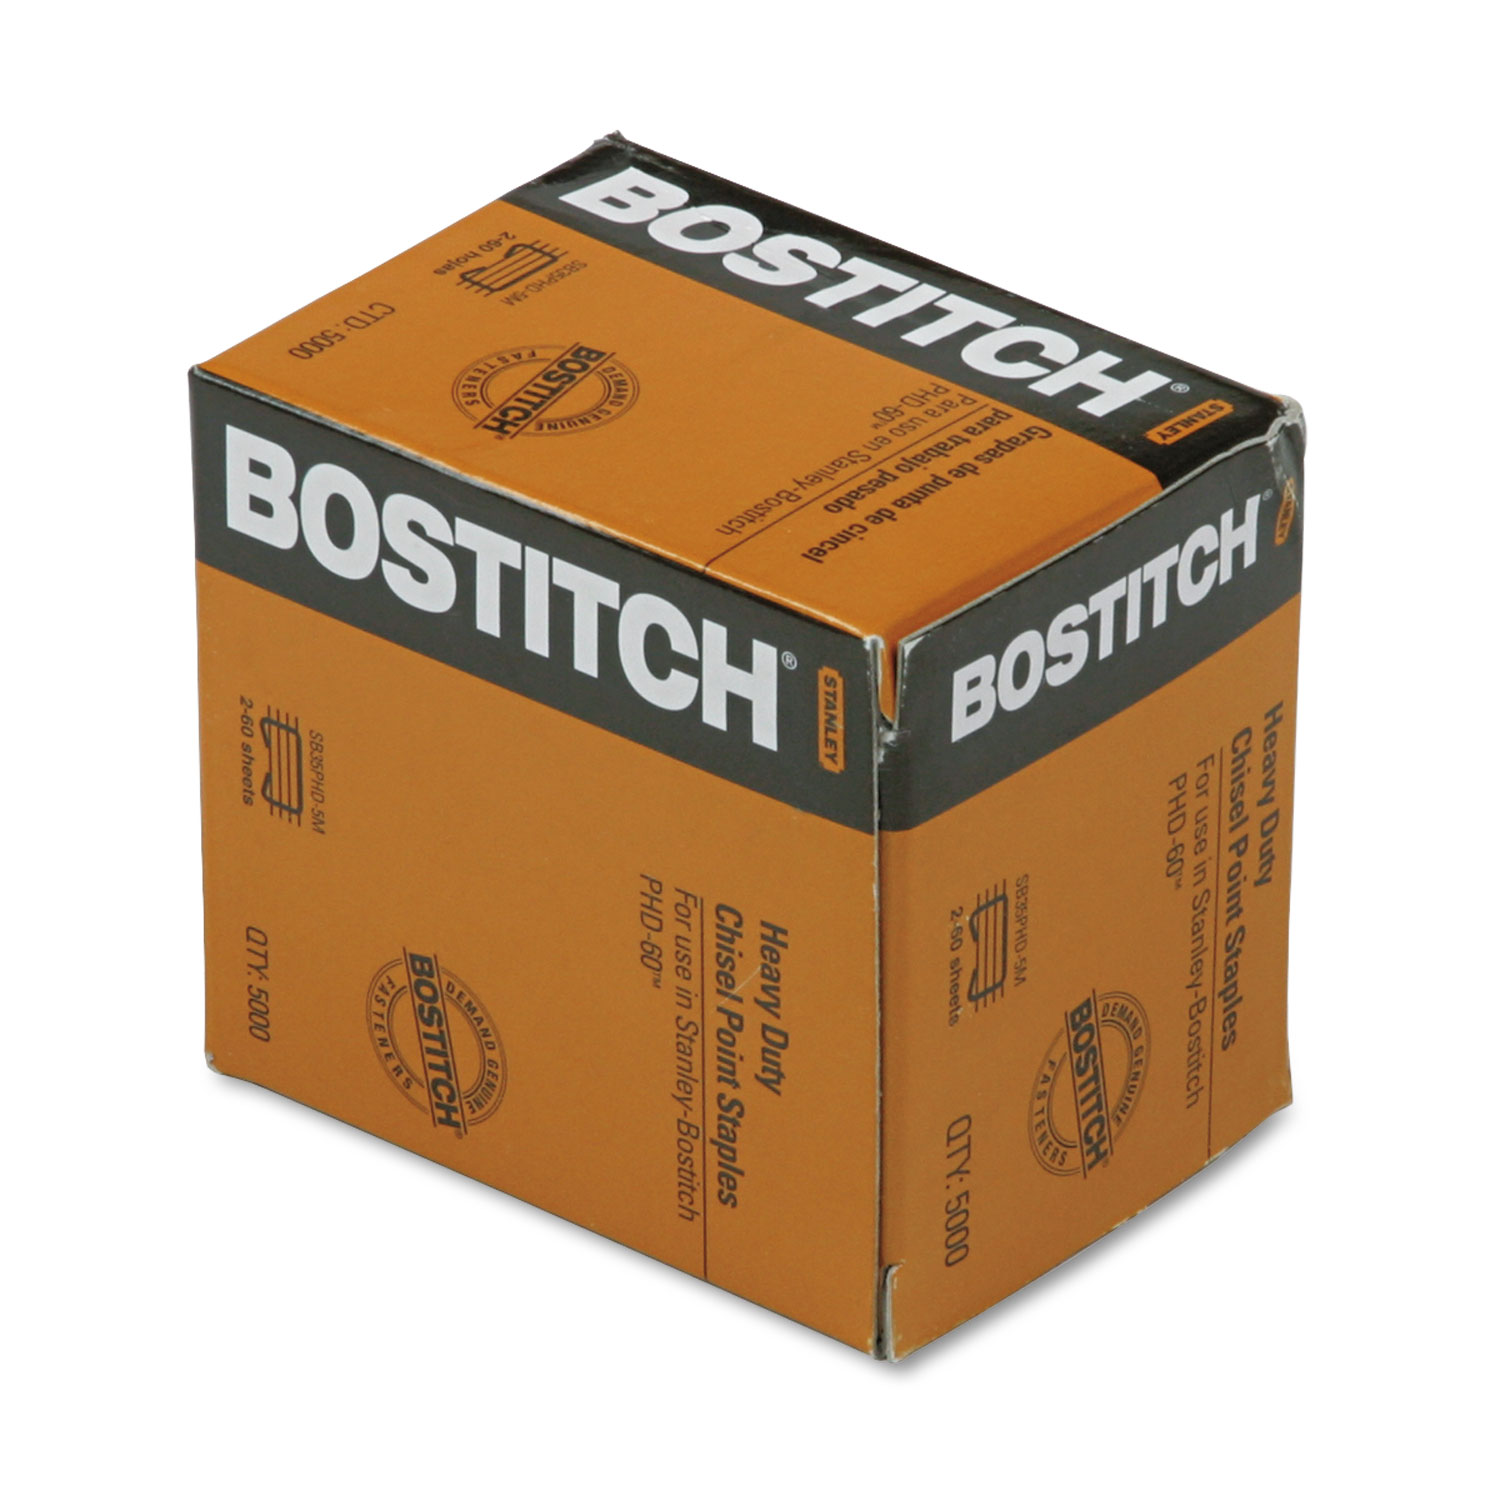 Stanley Bostitch Antimicrobial 130-Sheet Heavy-Duty Stapler - BOSB310HDS 